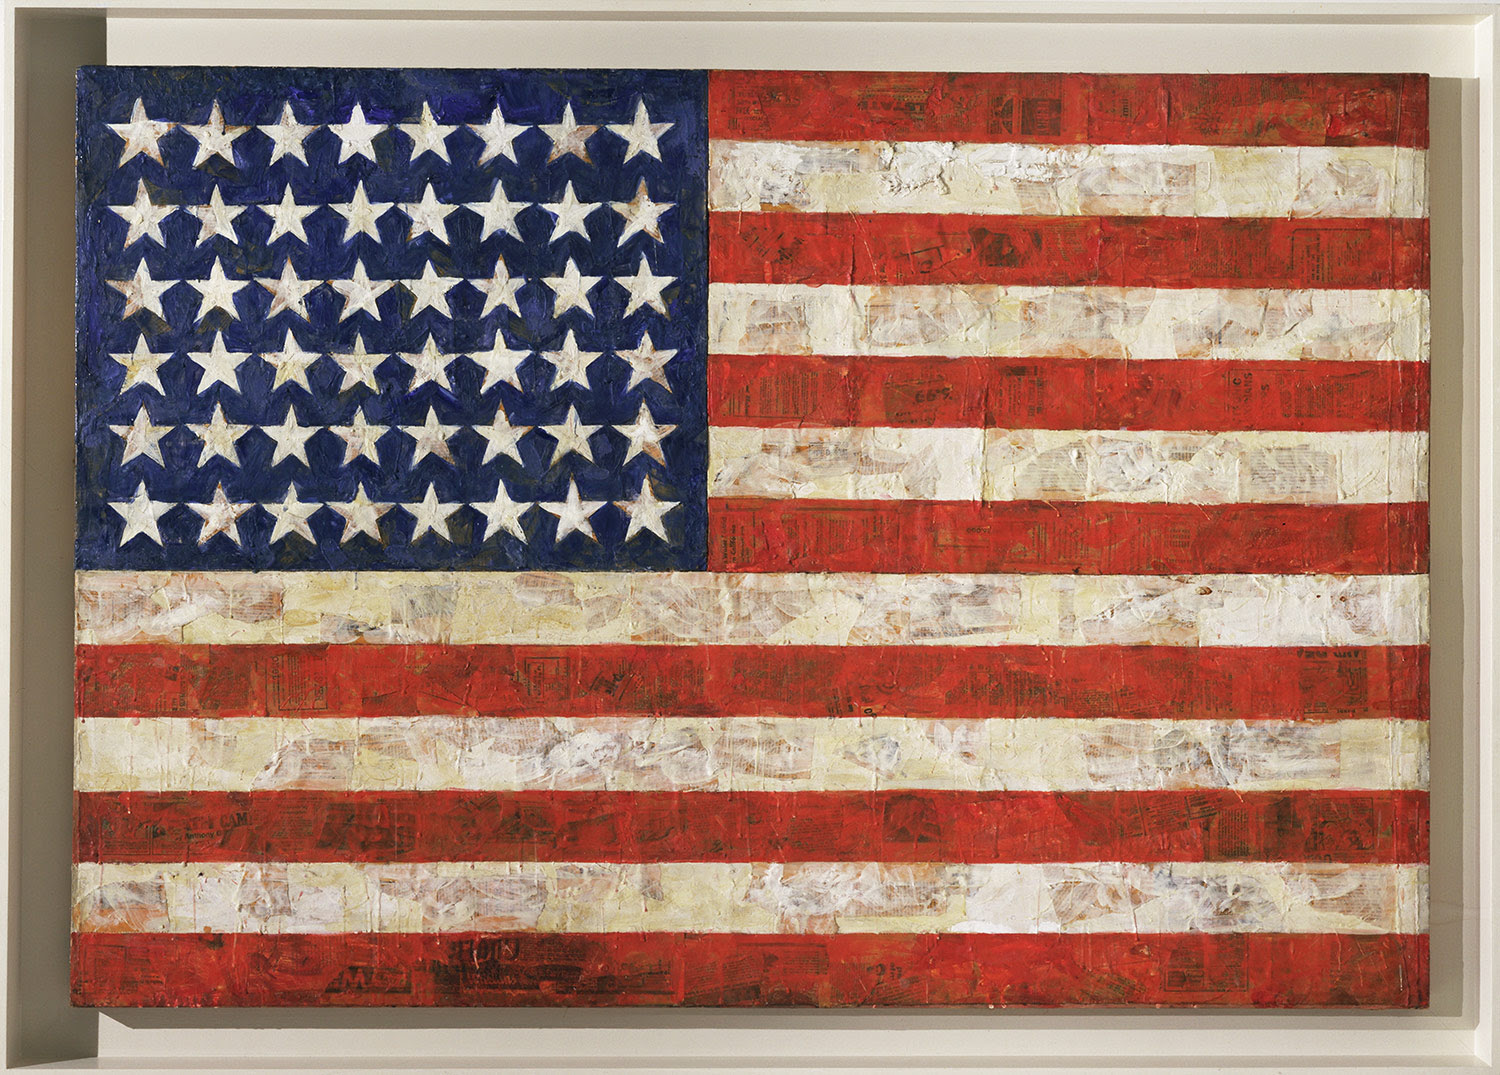 American flag by Jasper Johns